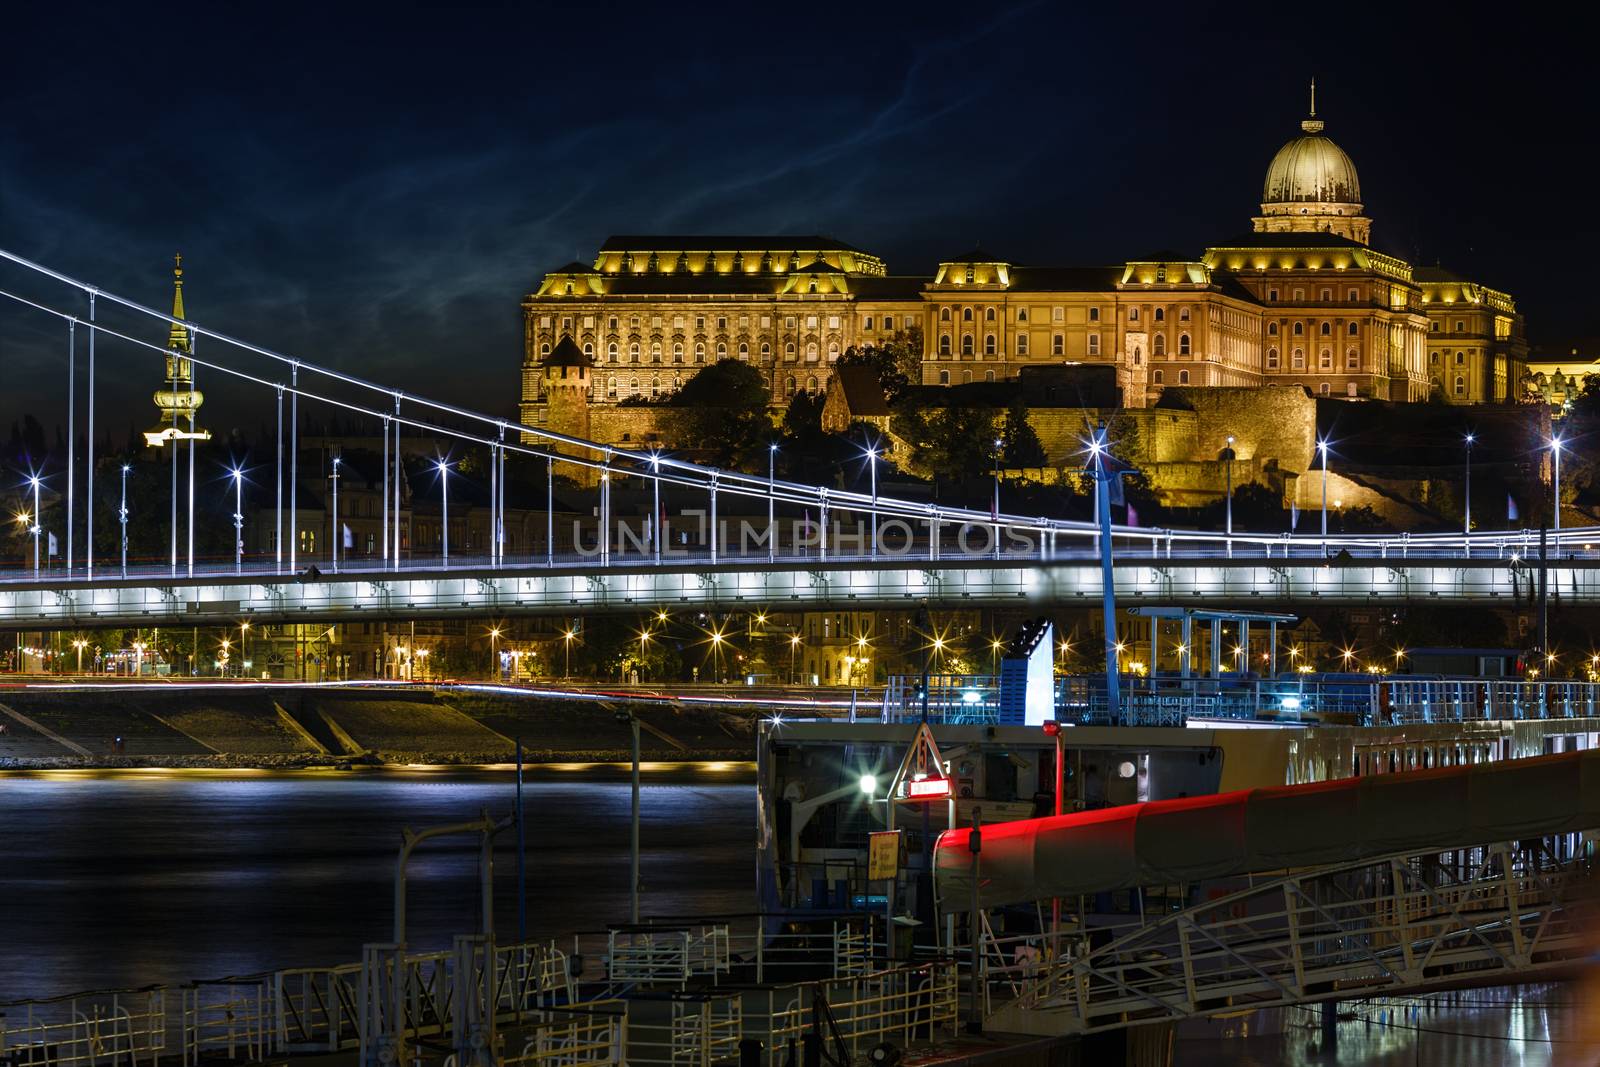  Buda castle night view by Roka